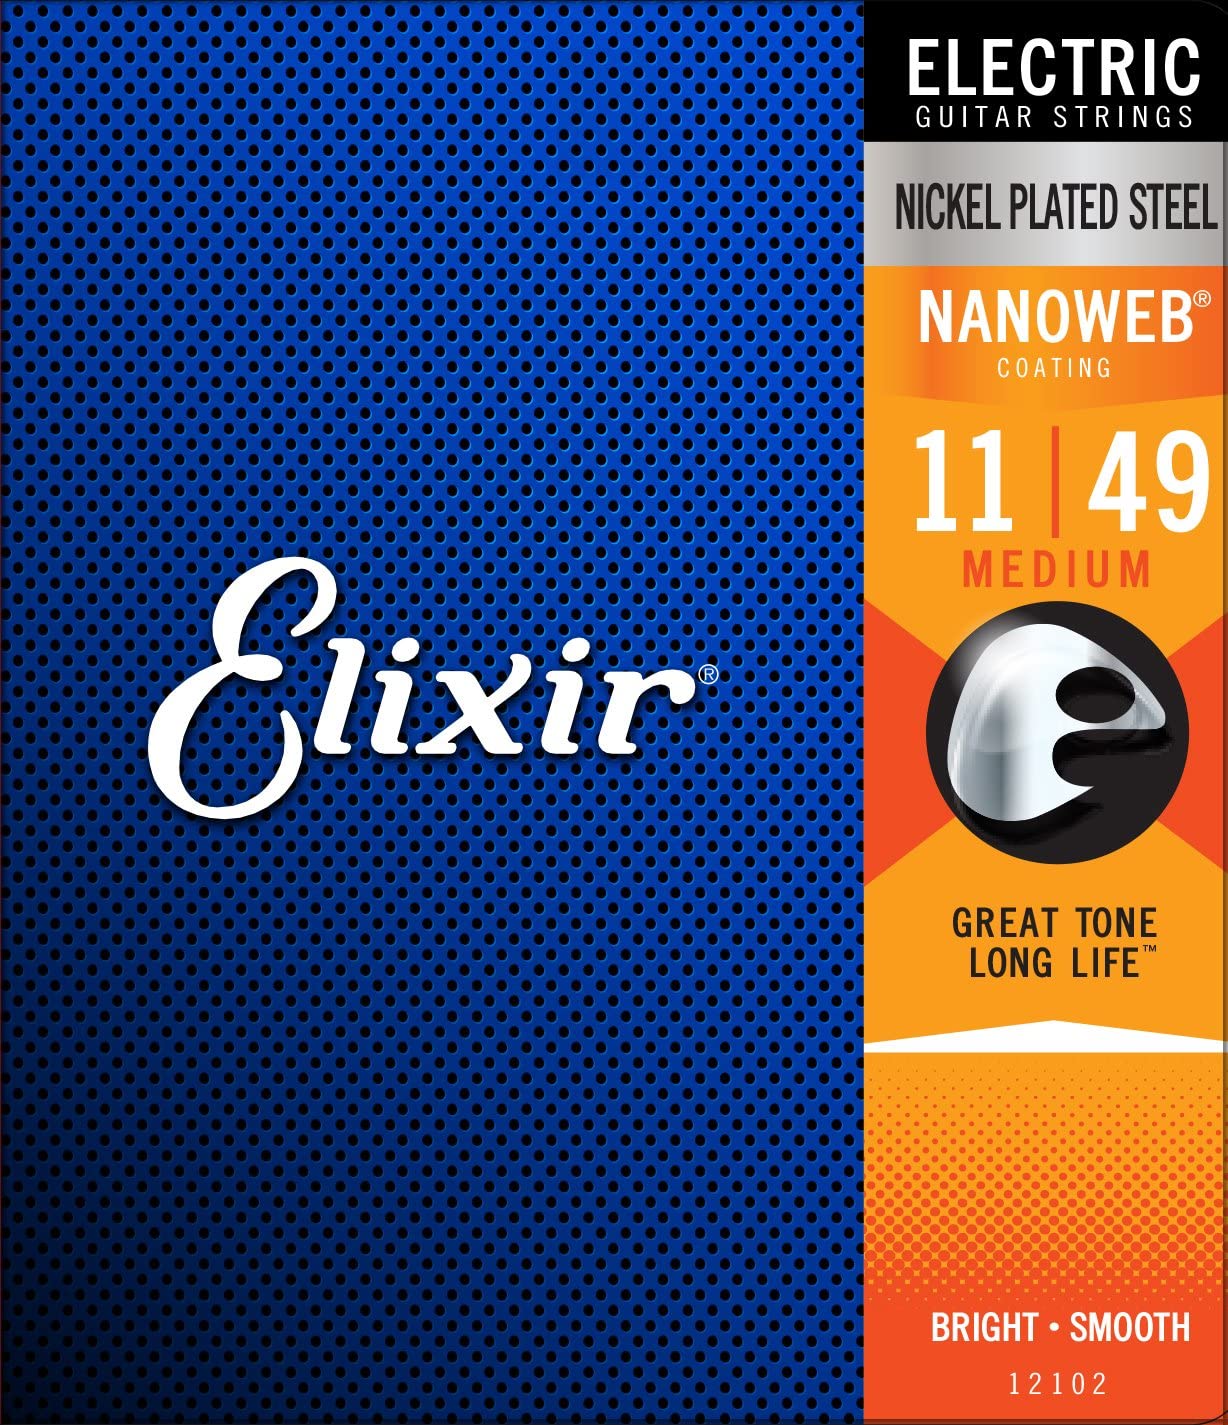 Corde per chitarra elettrica Elixir Diverse Misure: Super Light 009-042 / Custom Light 009-046 / Light 010-046 / Medium 011-049